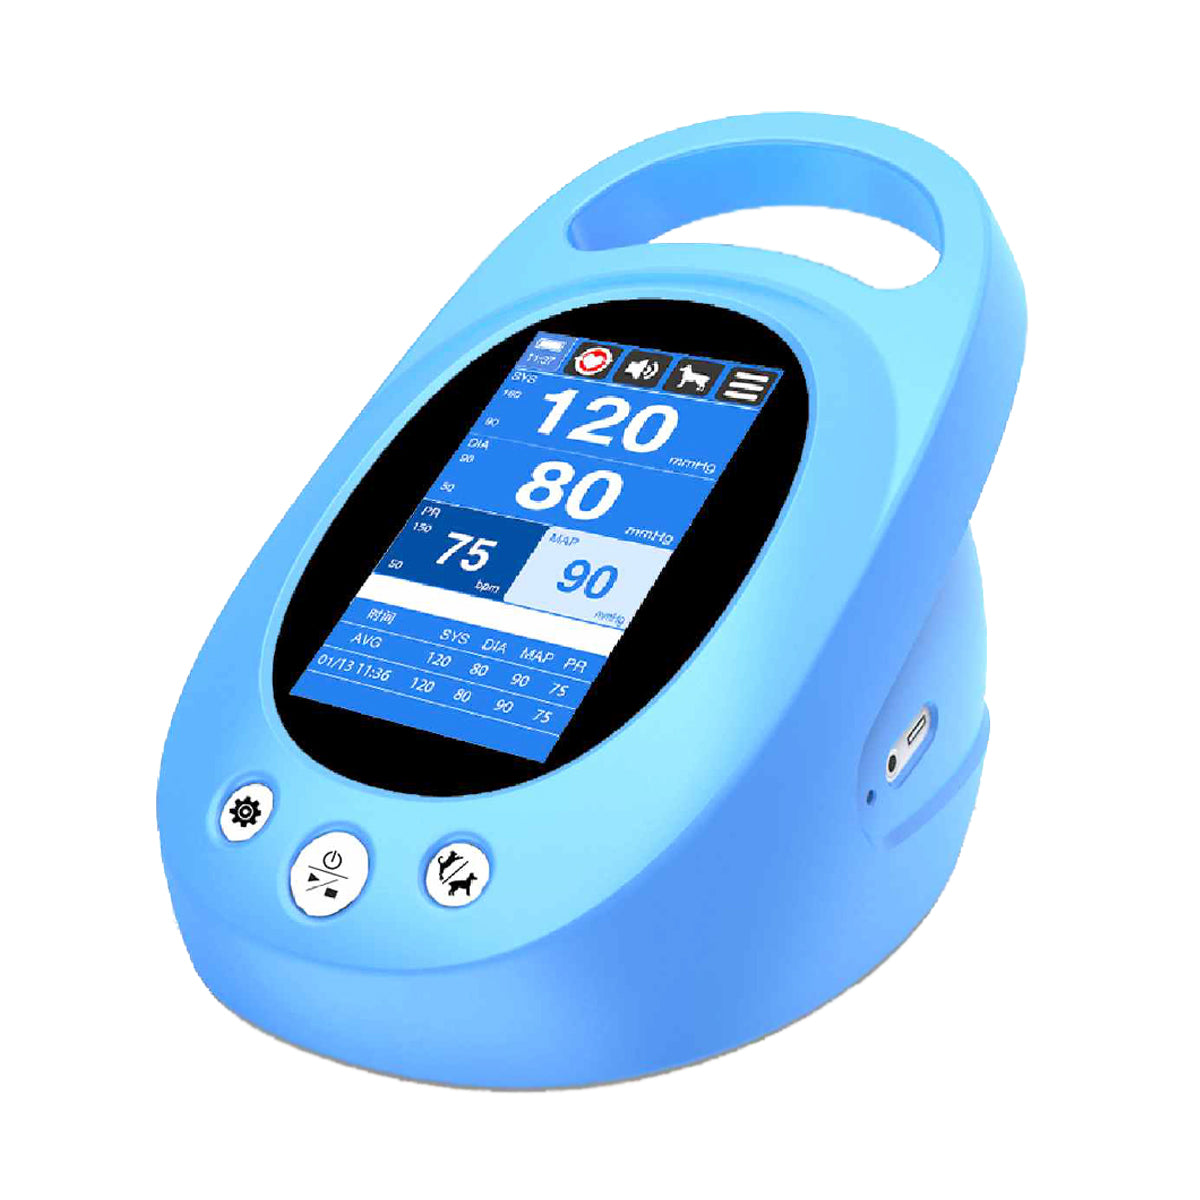 OMRON Professional blood pressure monitor - Sale